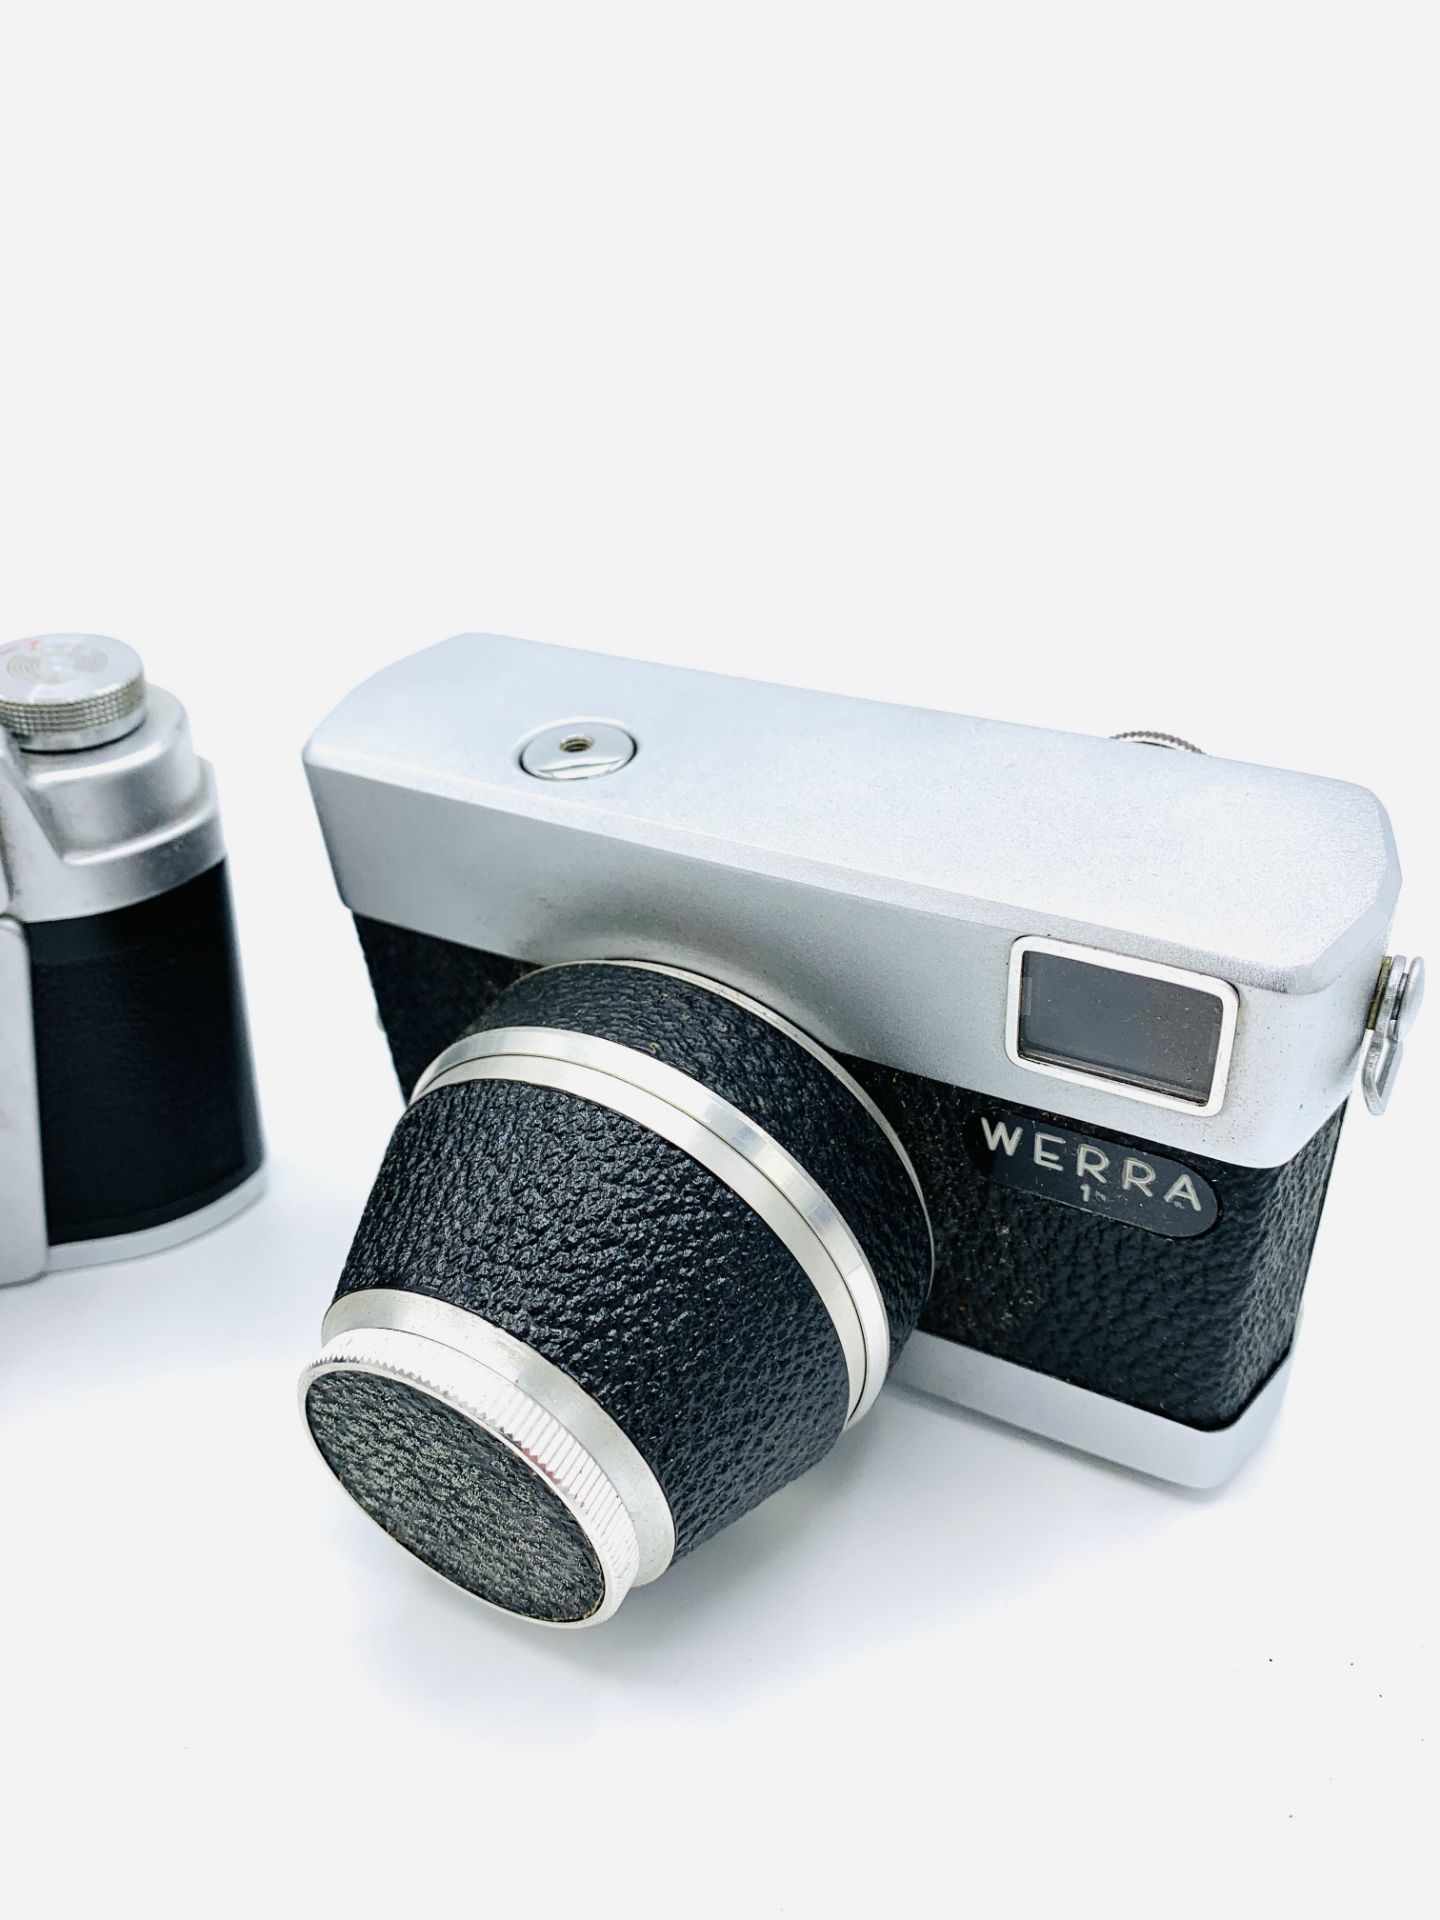 Leidolf, Wetzlar, Lordomat SLE camera, together with a Werra 1 camera - Image 3 of 4